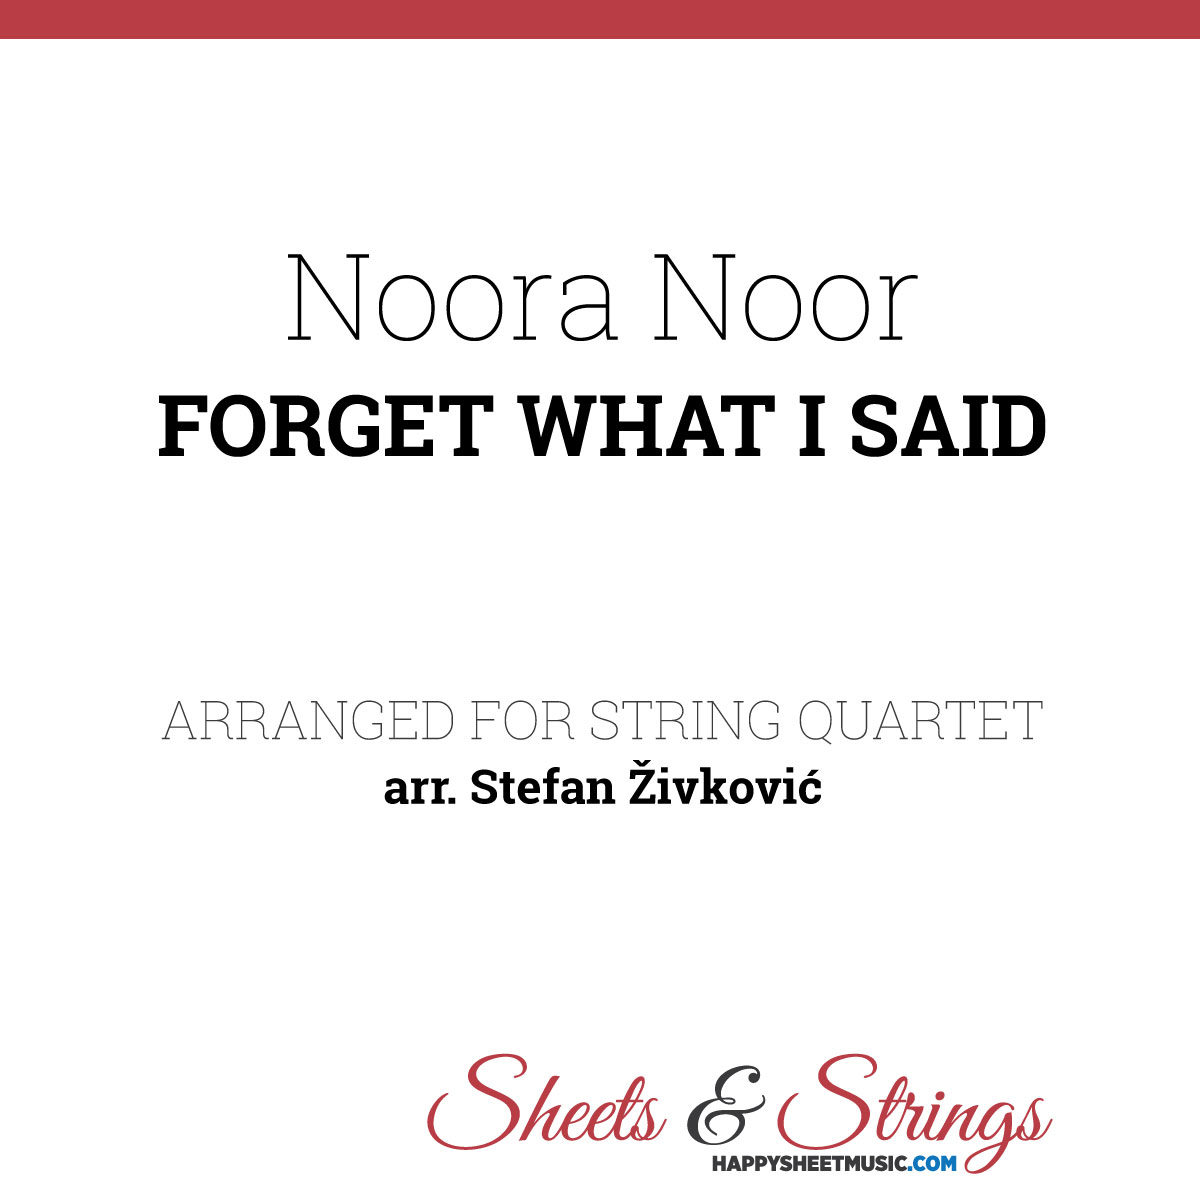 Noora Noor - Forget What I Said Sheet Music for String Quartet